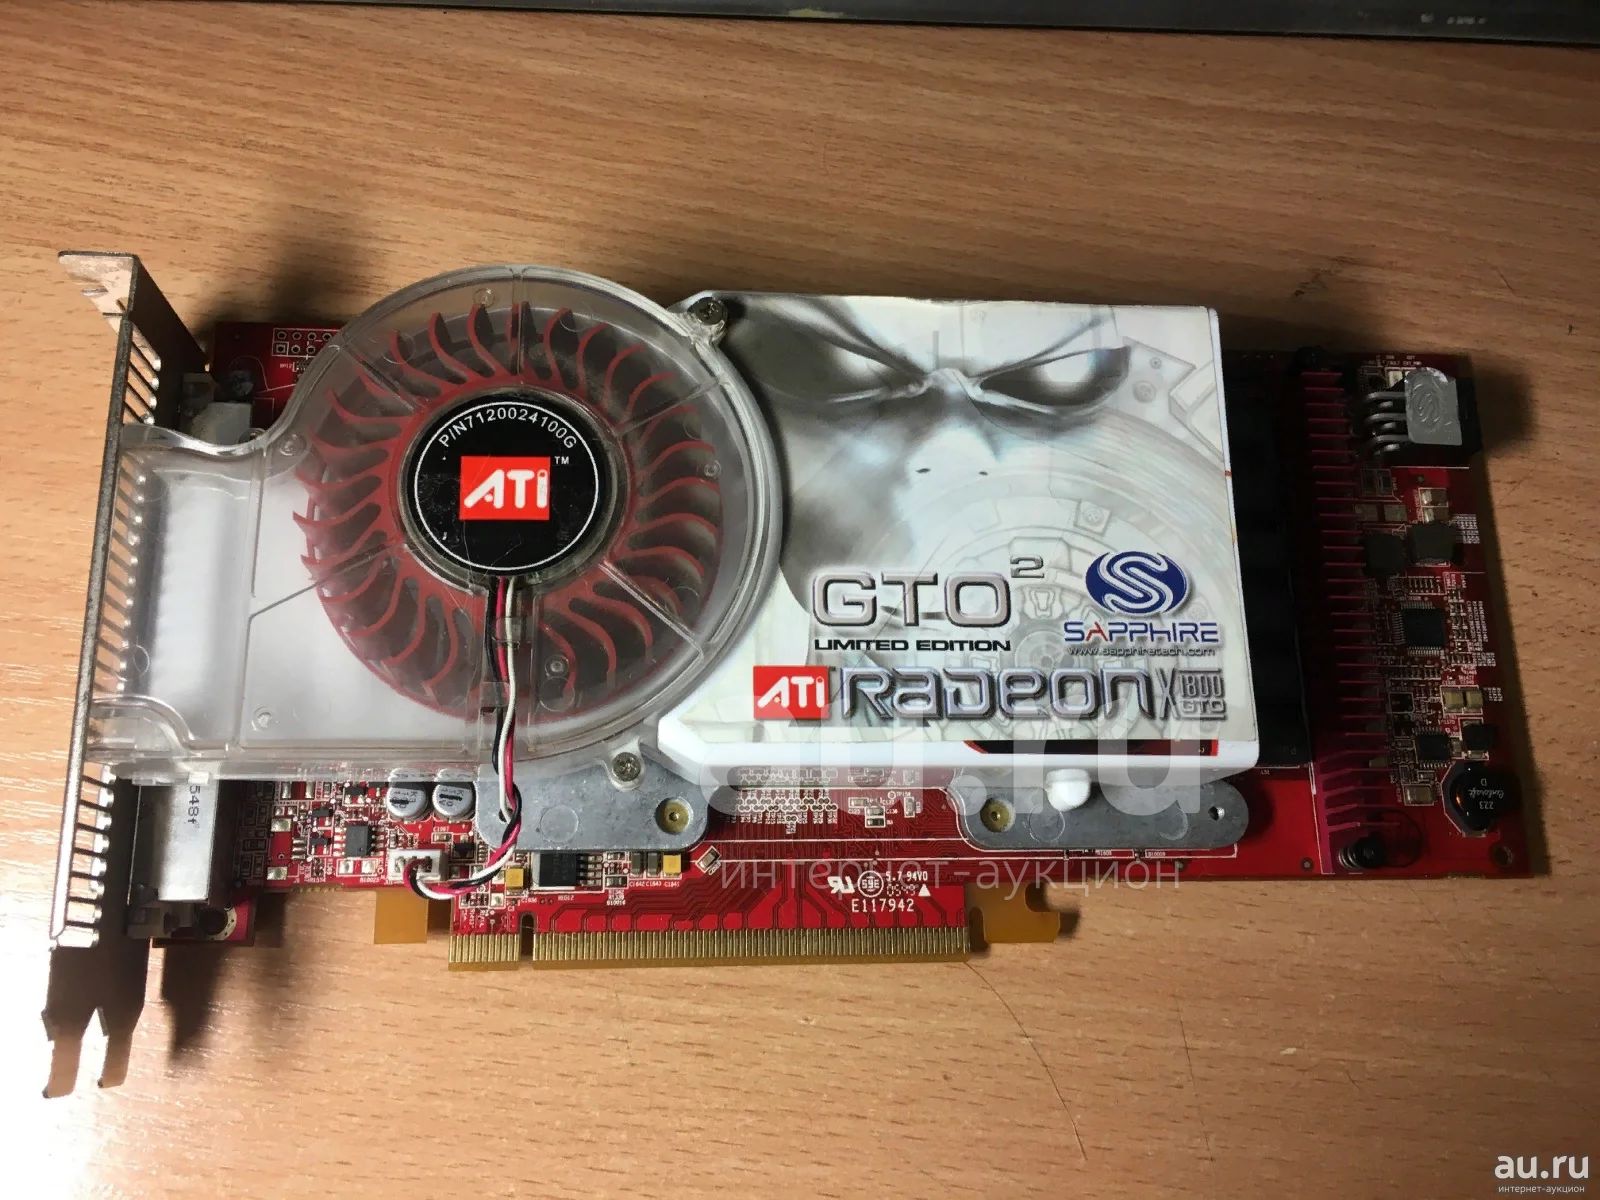 Radeon 7600 series. ATI Radeon x1800 GTO характеристики. Видеокарты ATI Radeon старые 512mb. Radeon 7600. Радеон 7600м против 920.